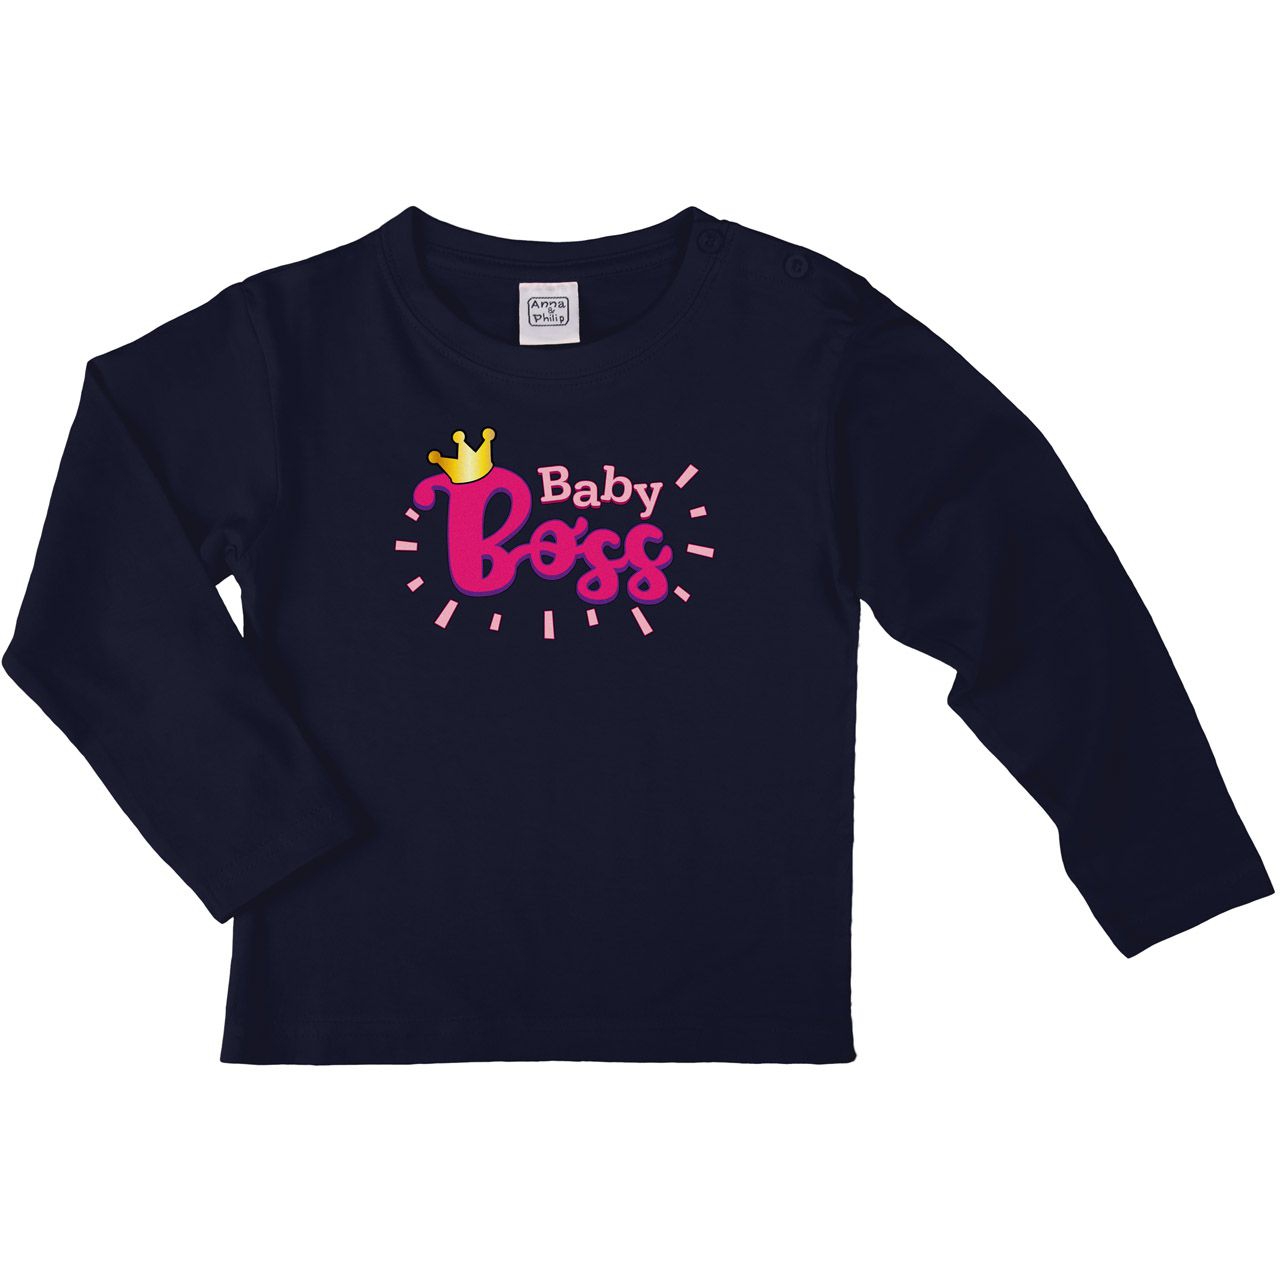 Baby Boss Pink Kinder Langarm Shirt navy 68 / 74